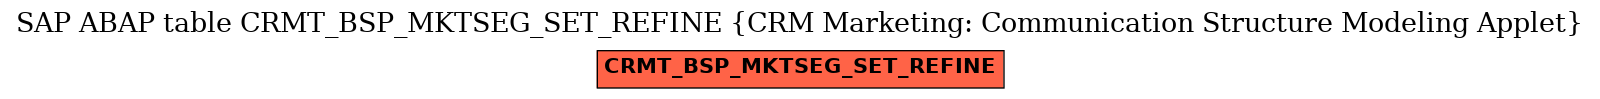 E-R Diagram for table CRMT_BSP_MKTSEG_SET_REFINE (CRM Marketing: Communication Structure Modeling Applet)